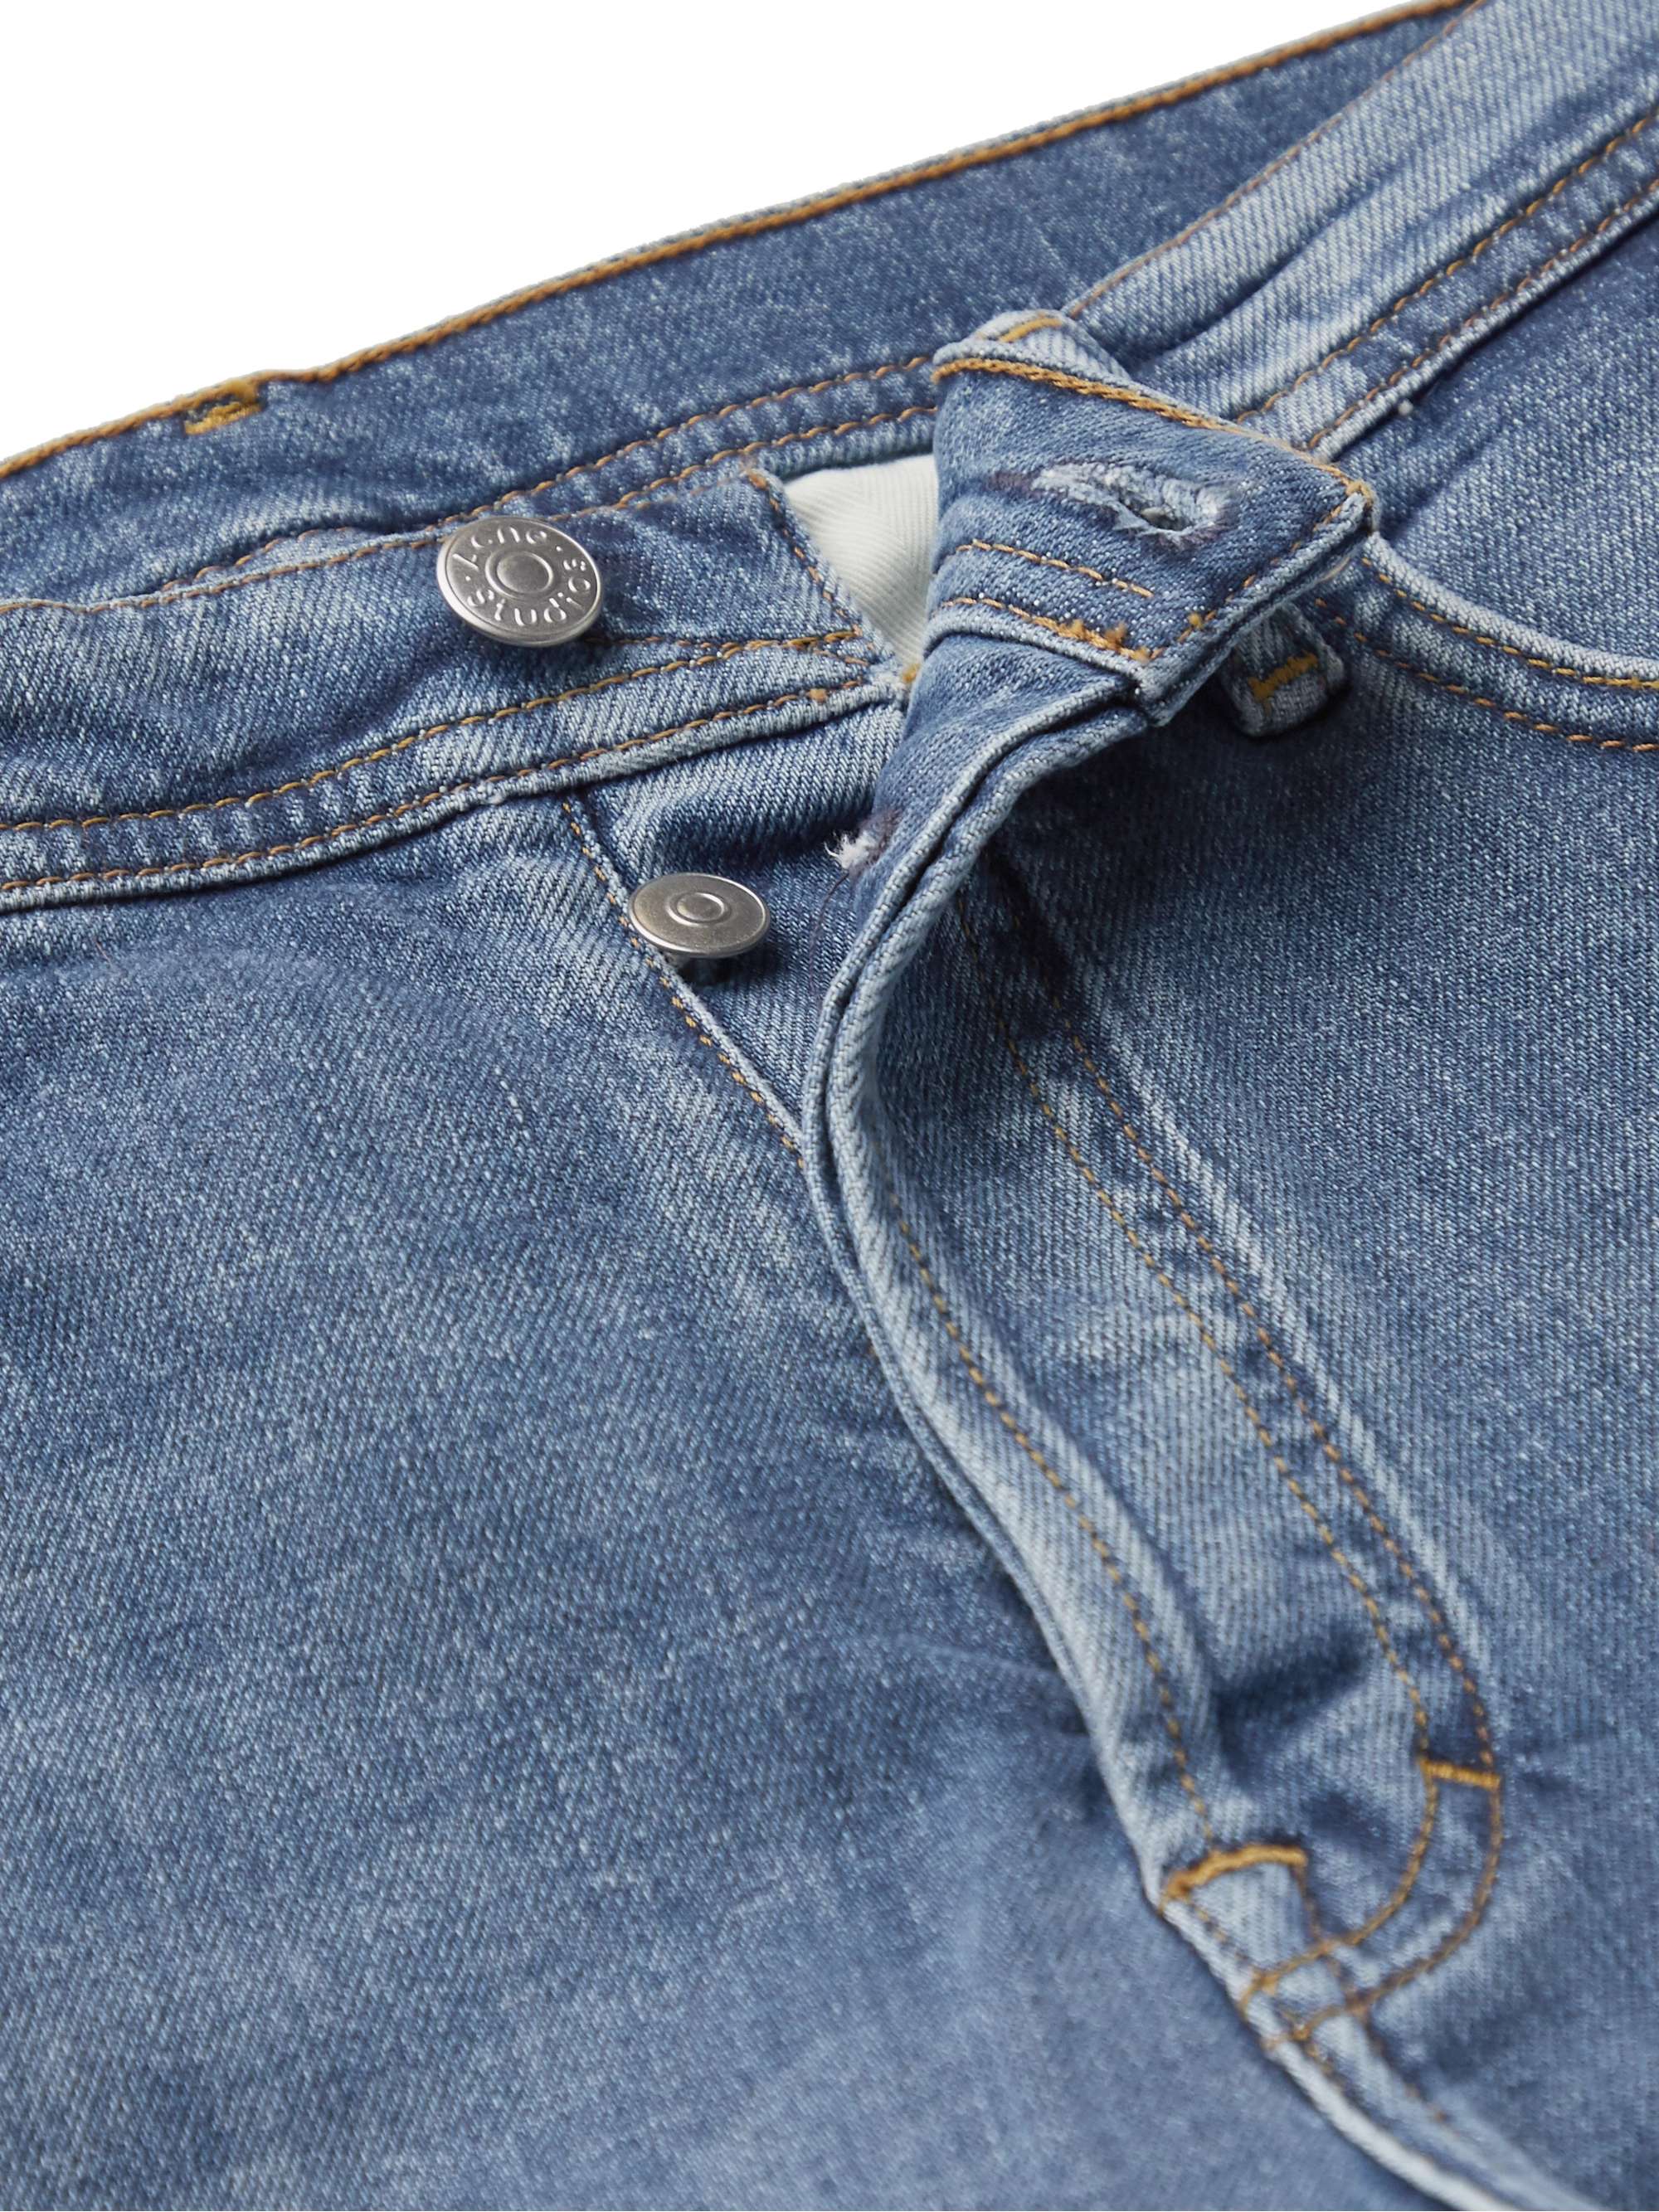 ACNE STUDIOS River Slim-Fit Tapered Stretch-Denim Jeans for Men | MR PORTER